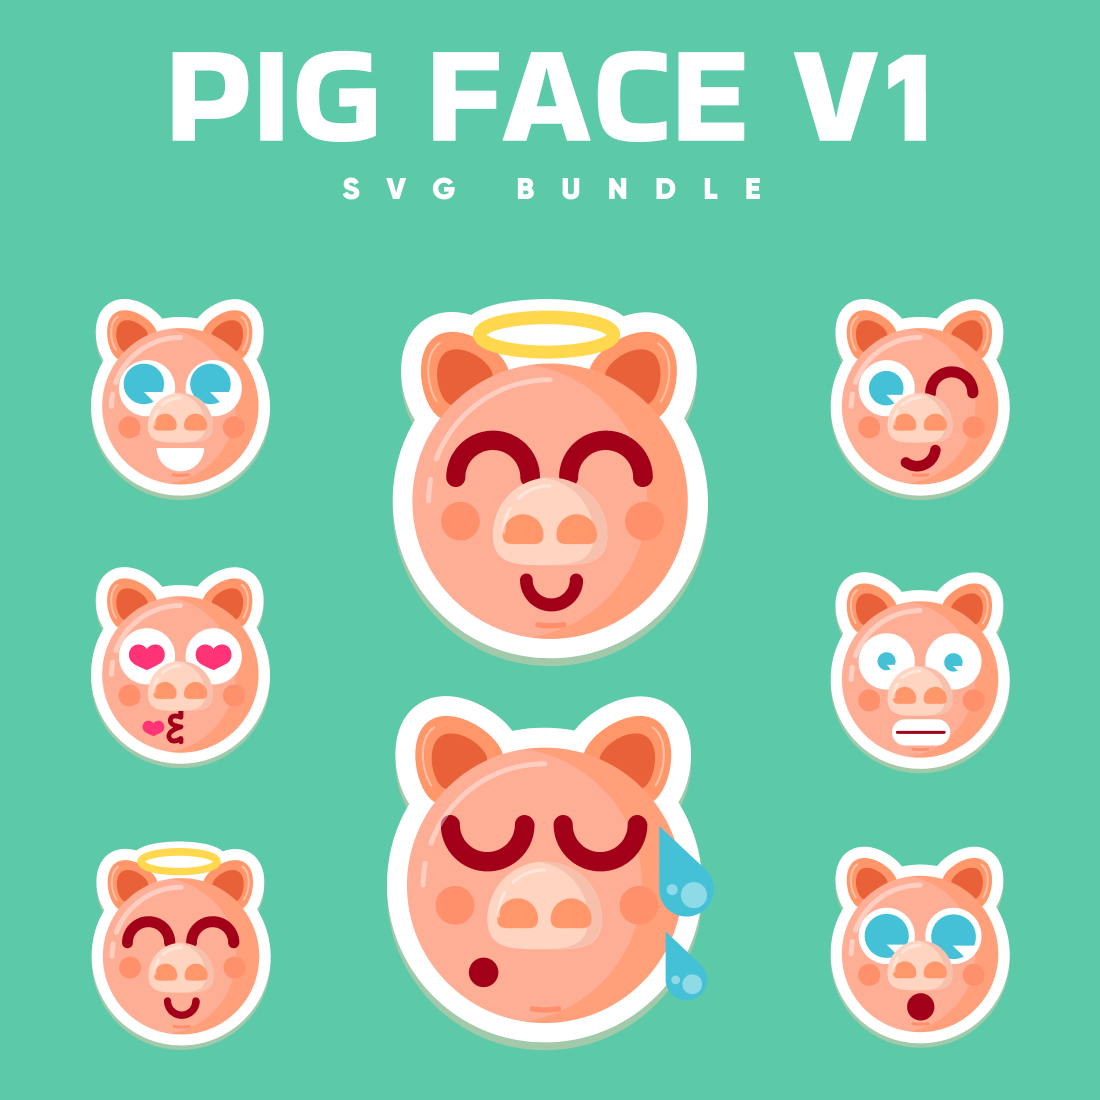 Interesting pig face v1 SVG.